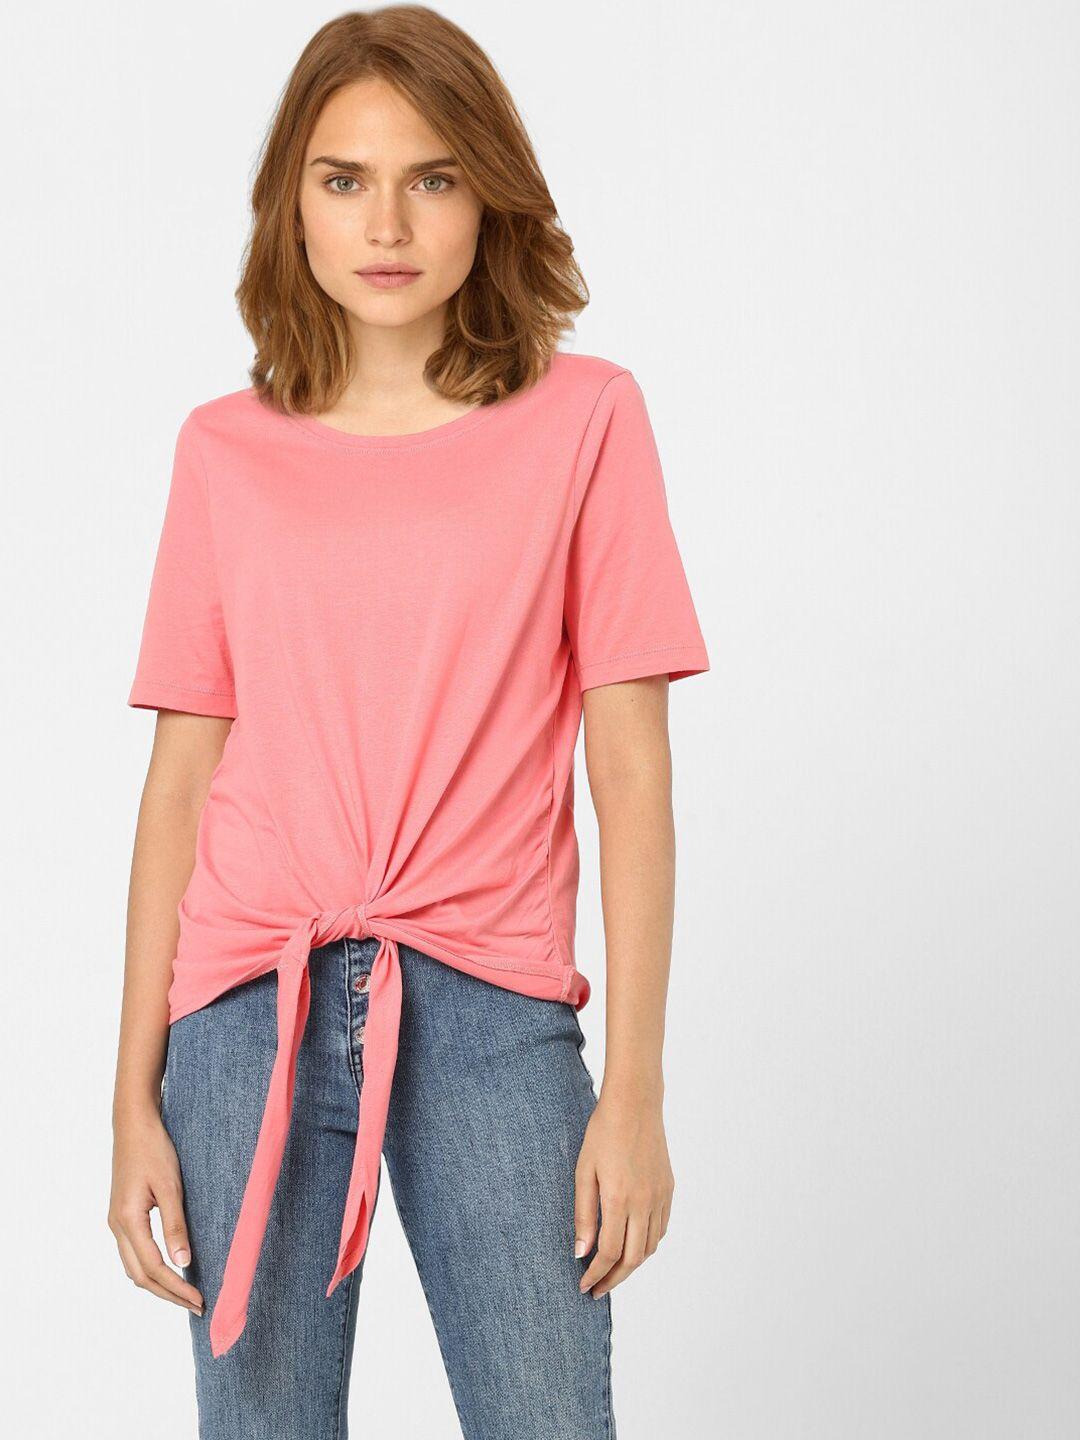 vero moda women pink t-shirt